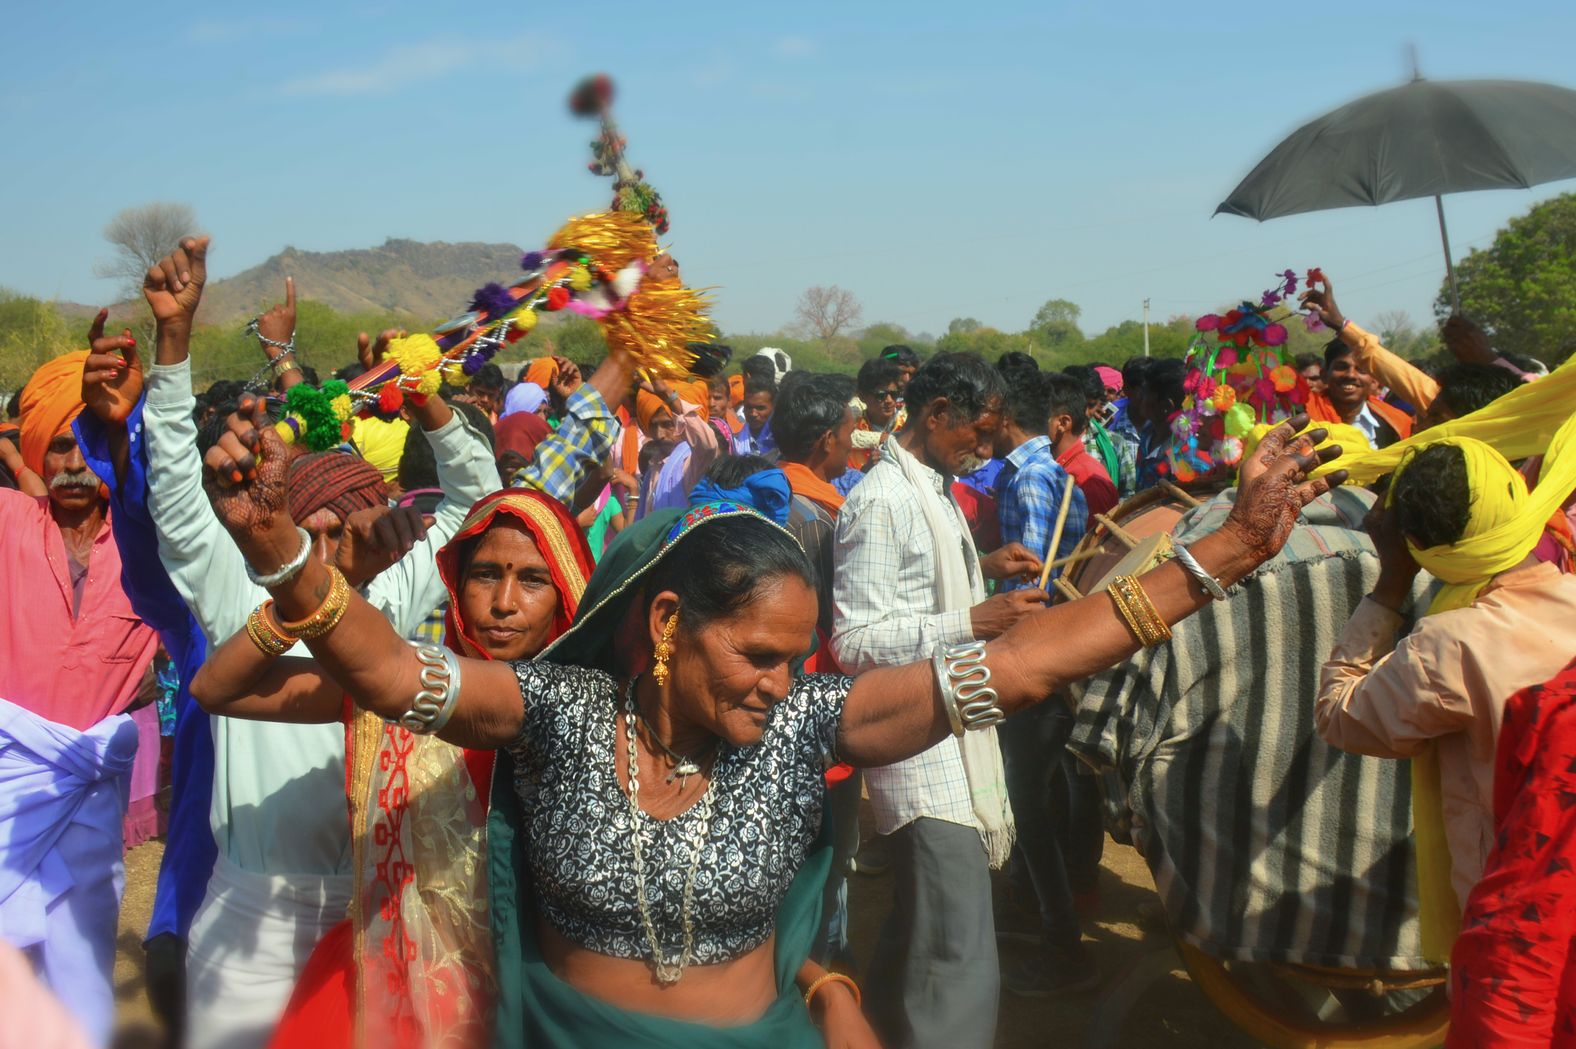 Traditional costume in the Bhangoriya festival